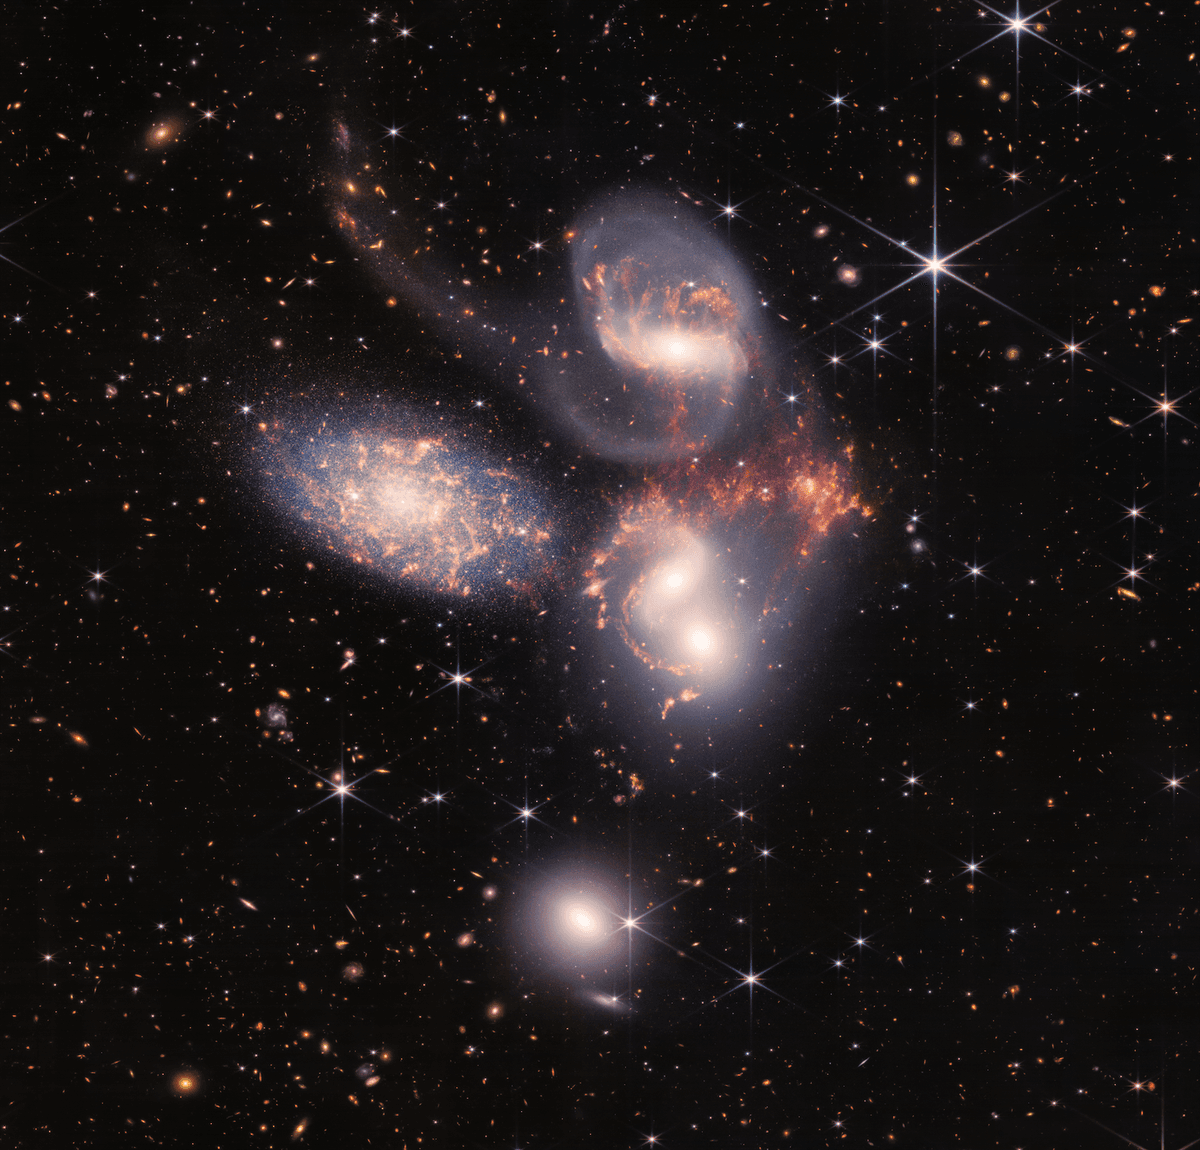 Stephan's Quintet. (<a href="https://webbtelescope.org/contents/media/images/2022/034/01G7DA5ADA2WDSK1JJPQ0PTG4A?Collection=First%20Images&news=true">NASA, ESA, CSA, STScI</a>)